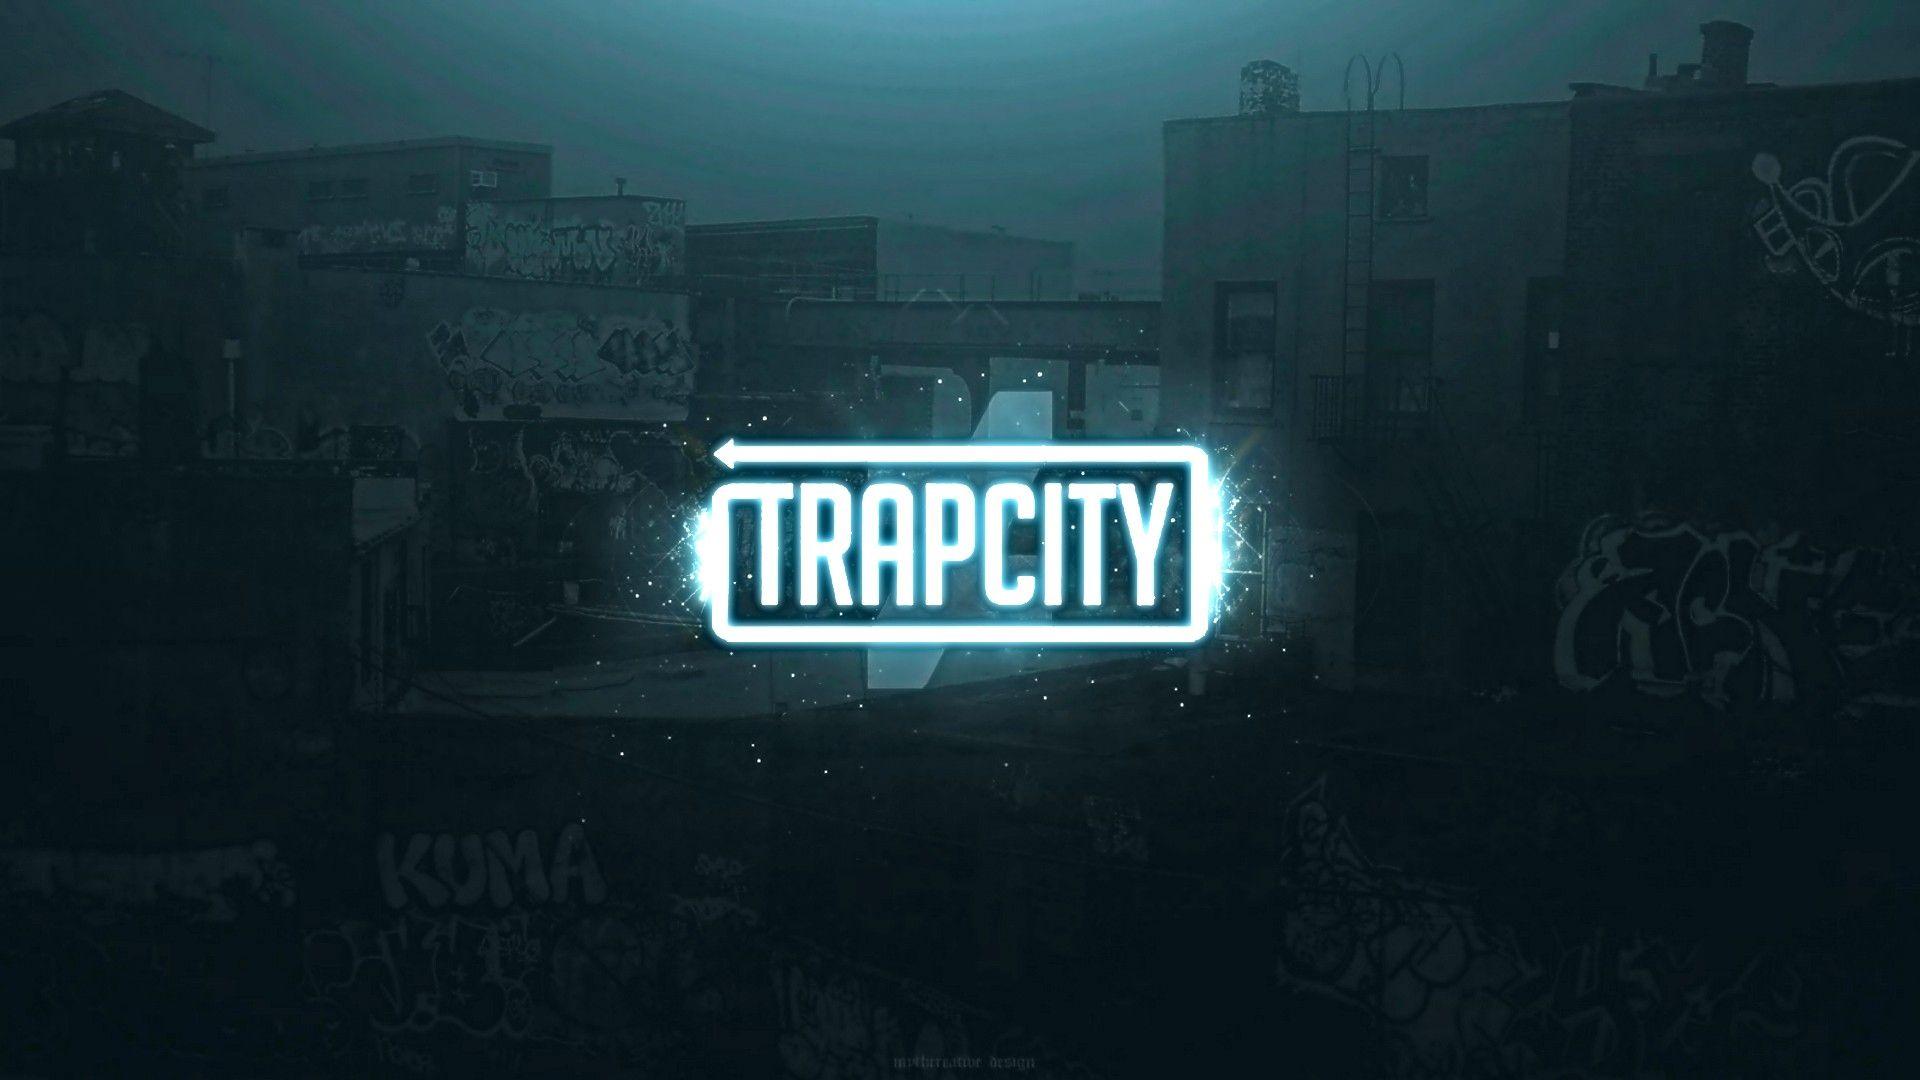 Trapcity, HD Typography, 4k Wallpaper, Image, Background, Photo